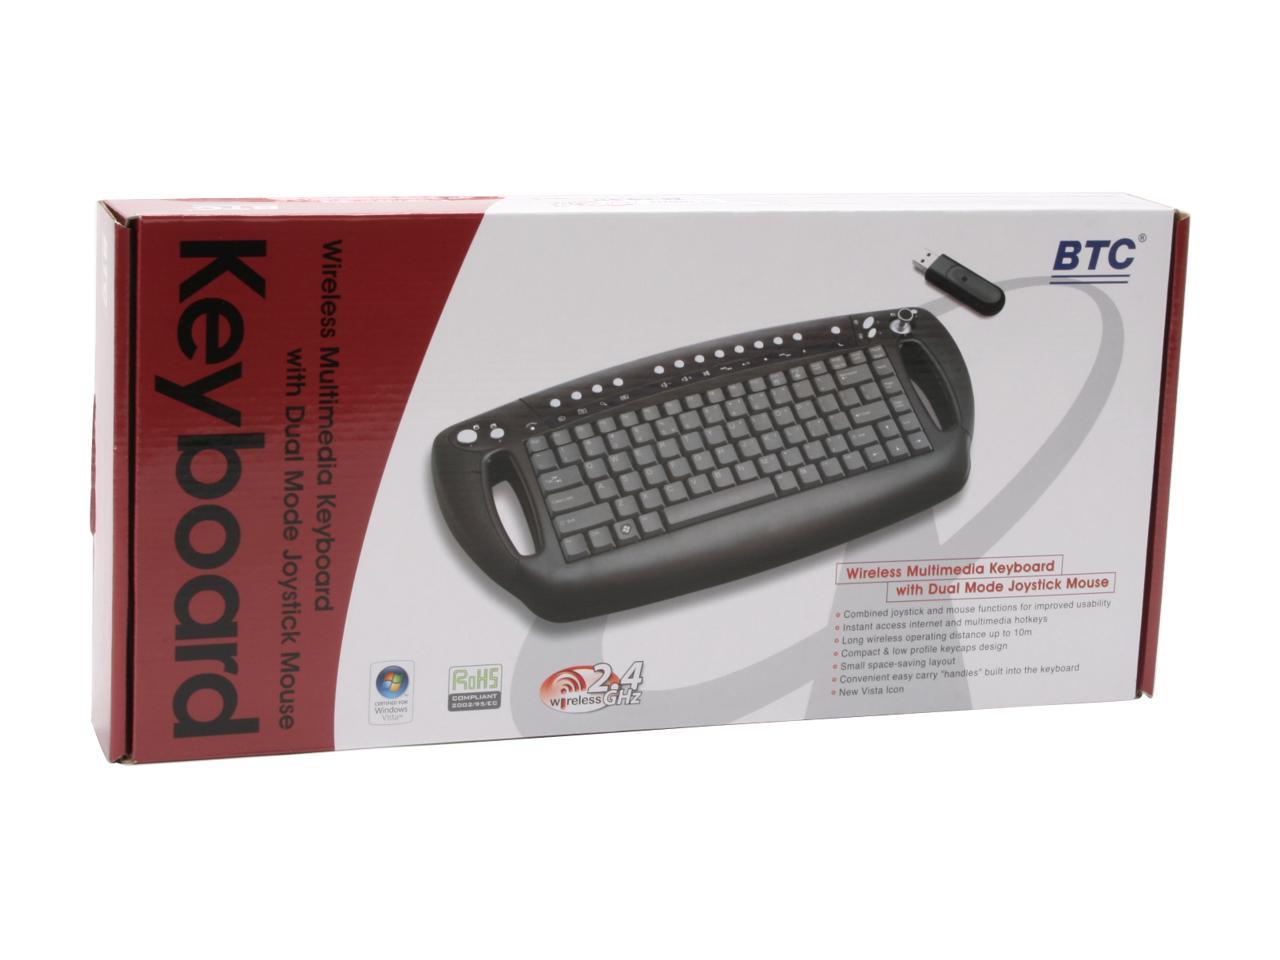 btc 9019urf iii wireless multimedia keyboard